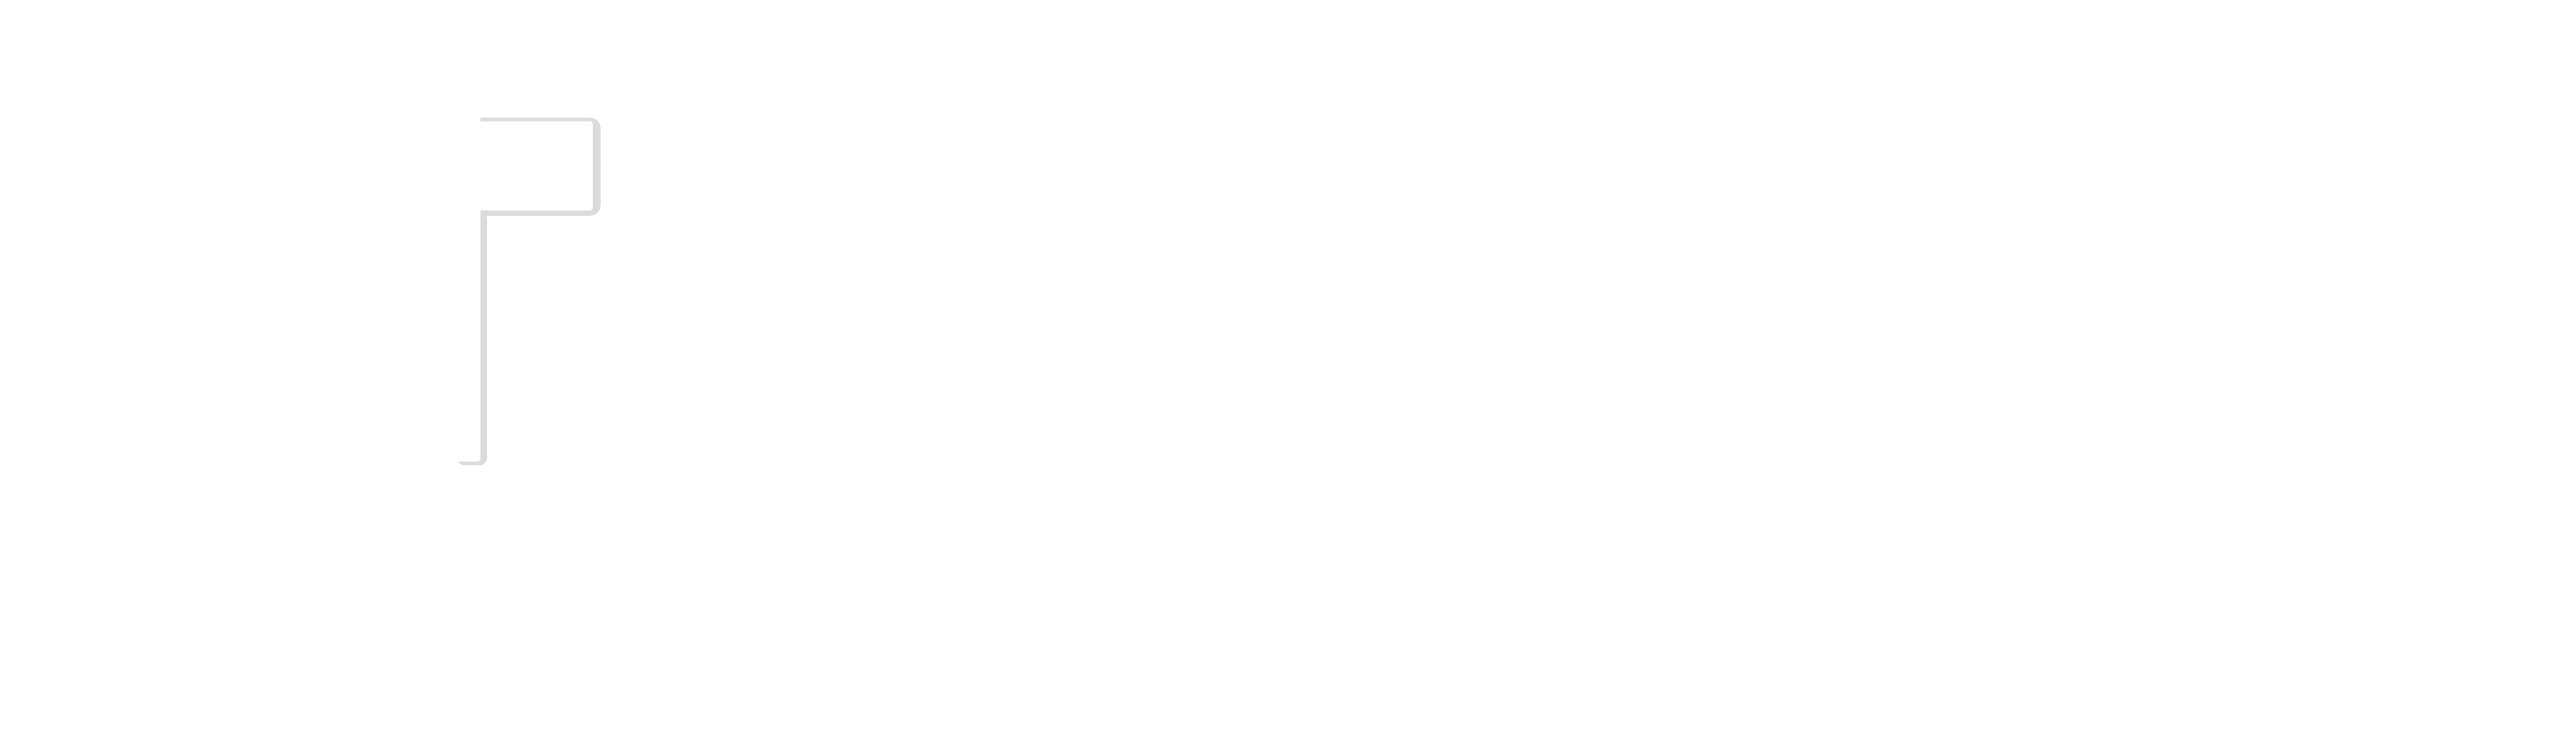 New Bethlehem First Fellowship Church